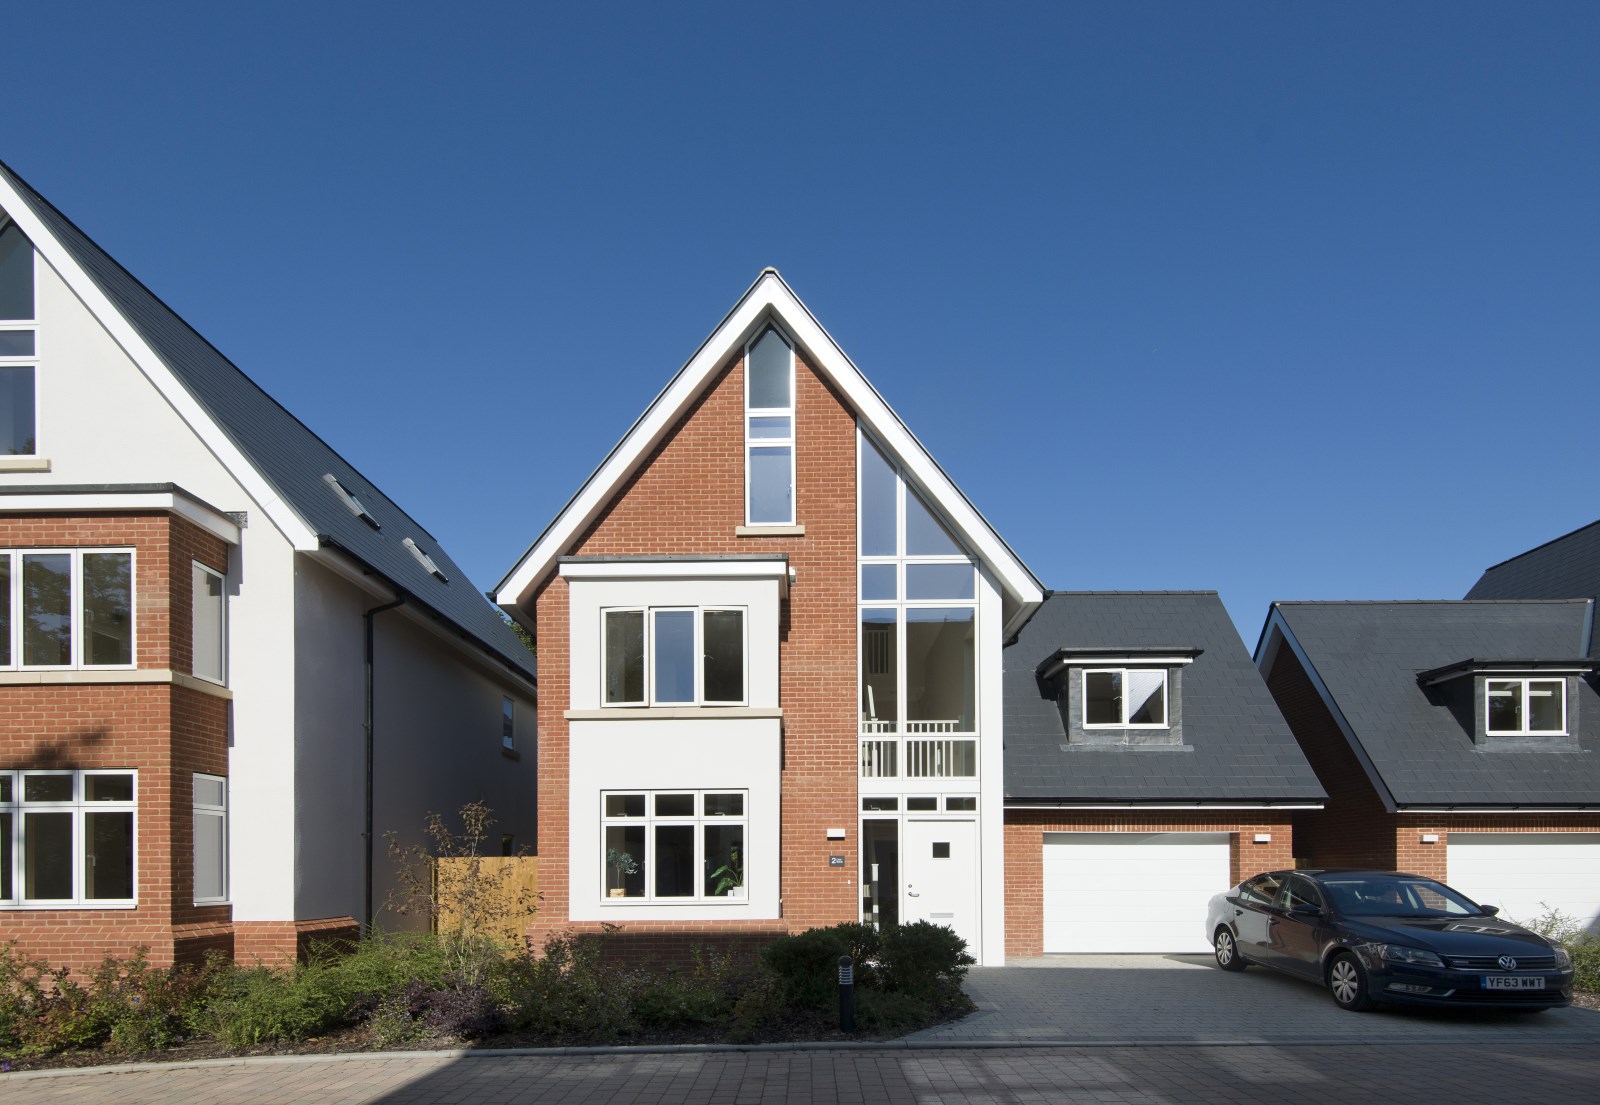 Award winning development of nine detached houses in six house designs